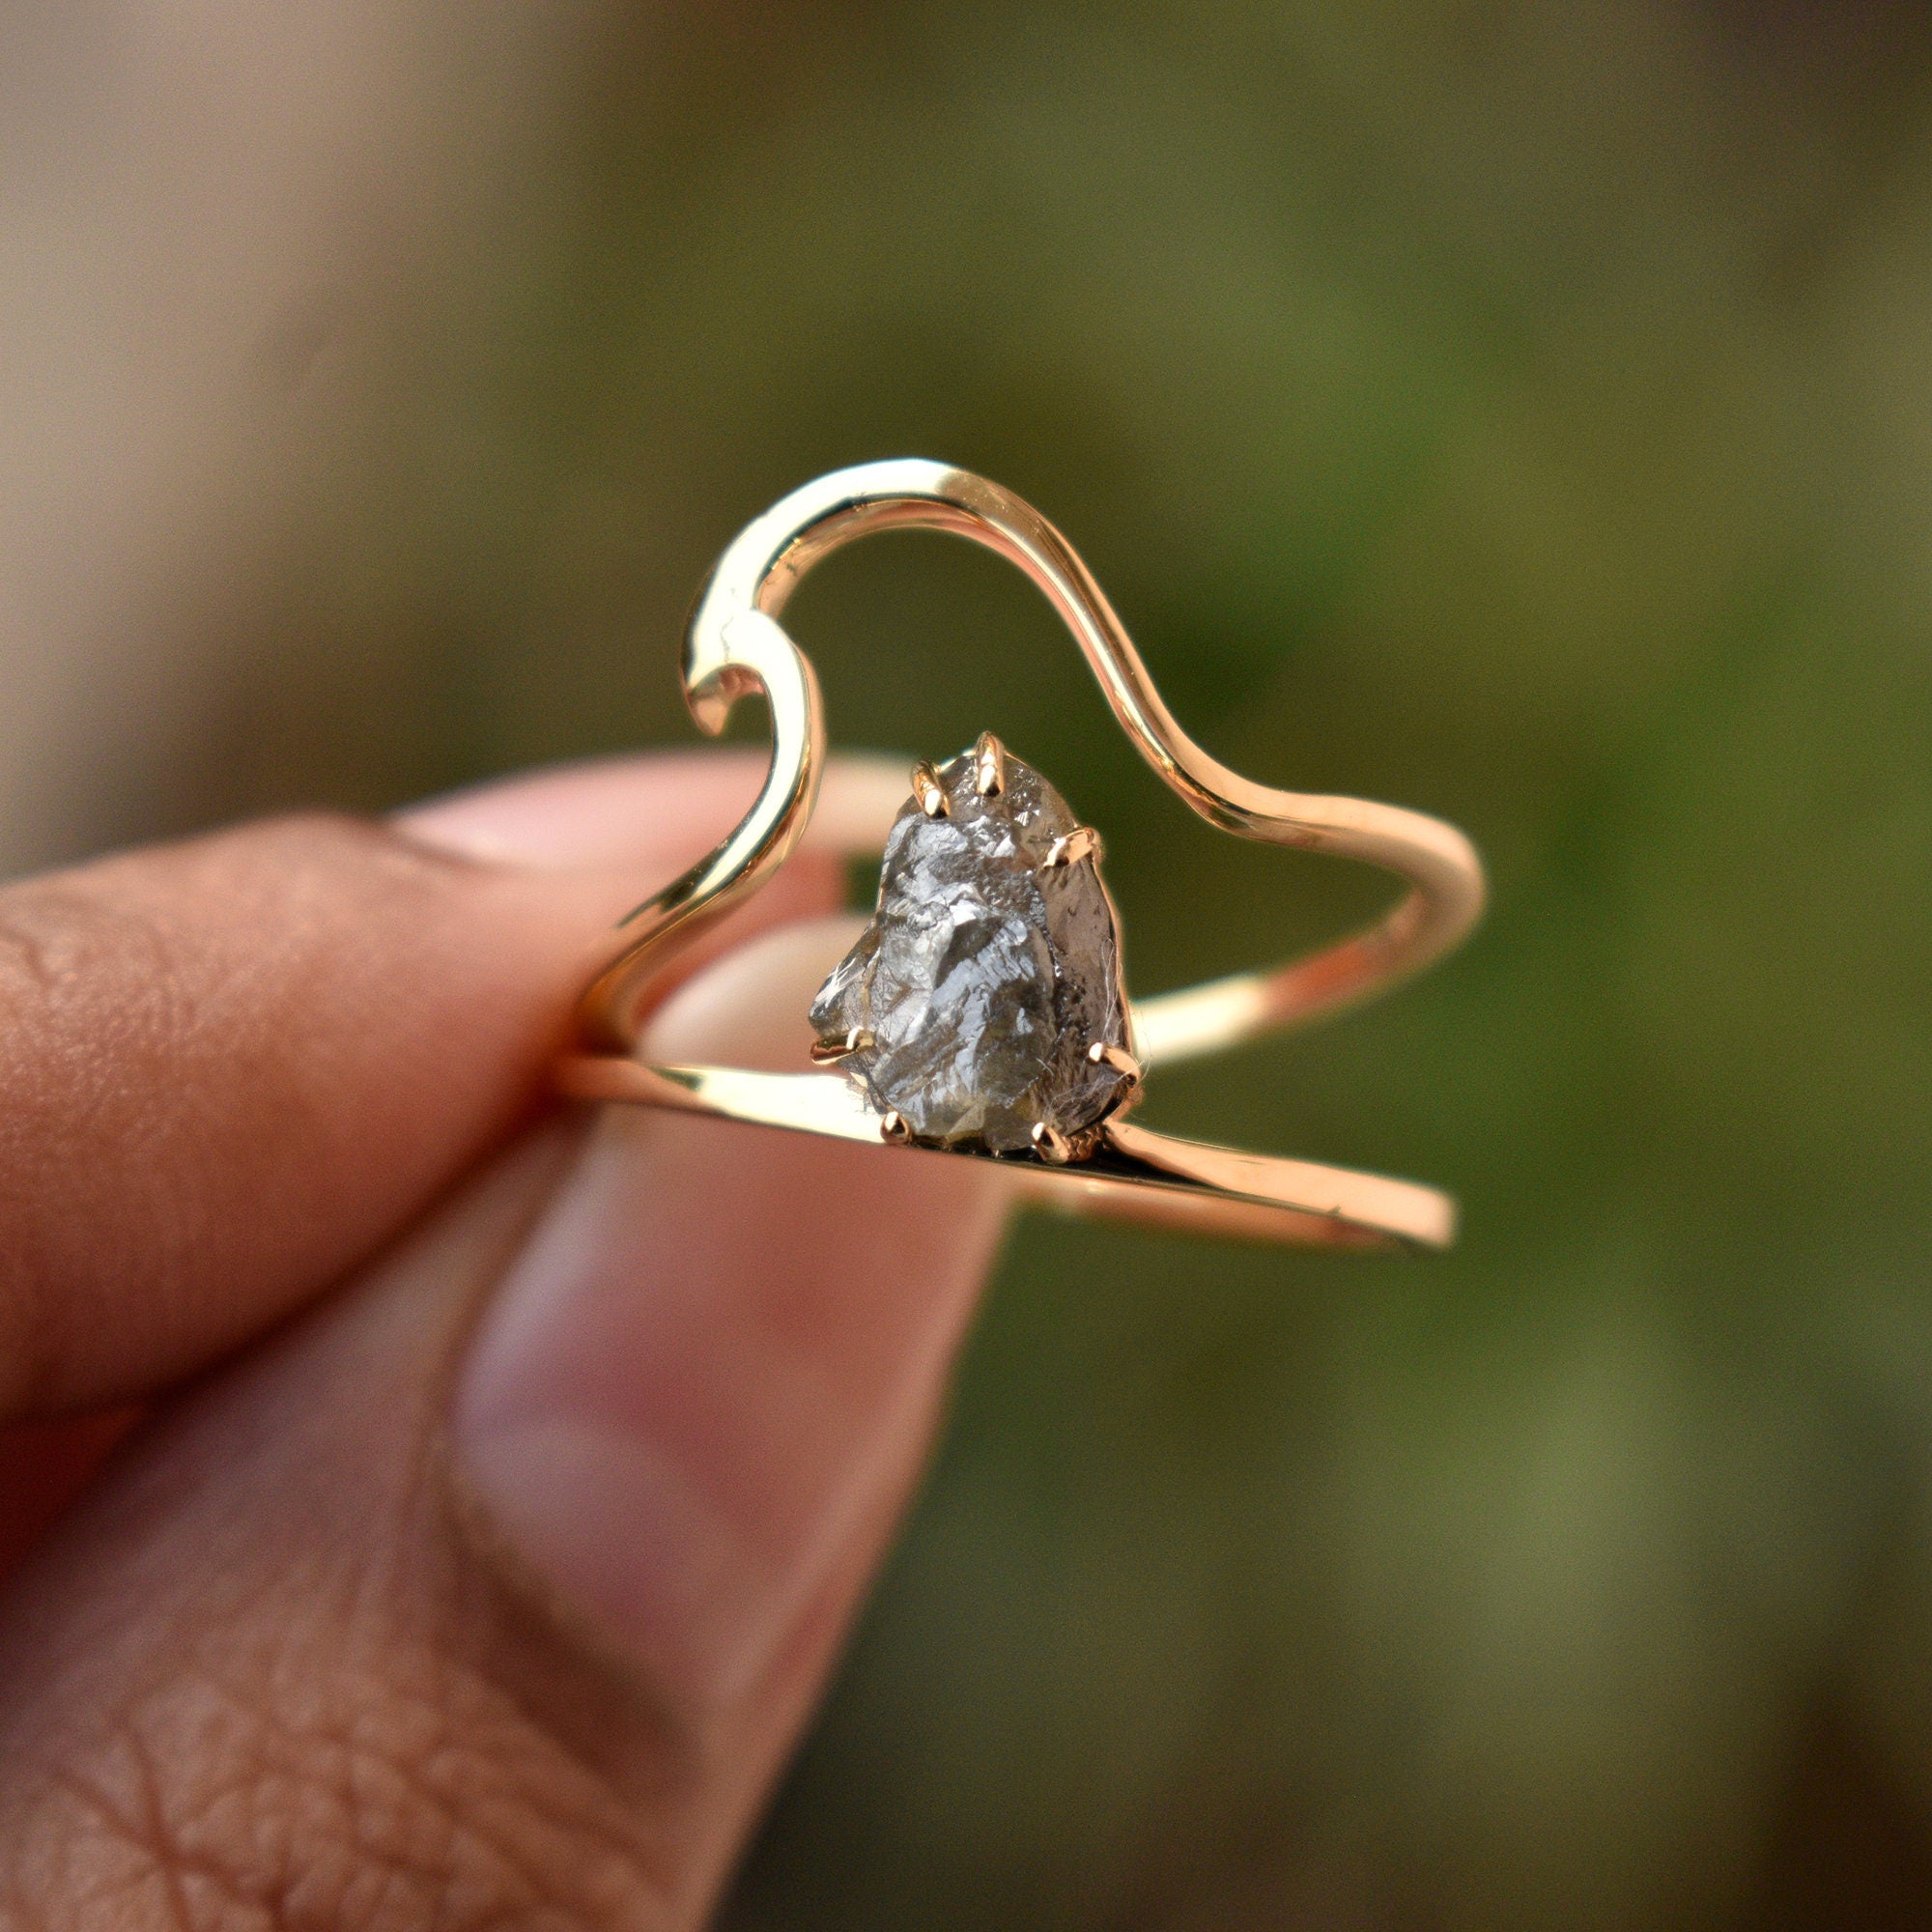 Wearing Uncut Diamond Rings | Rare carat